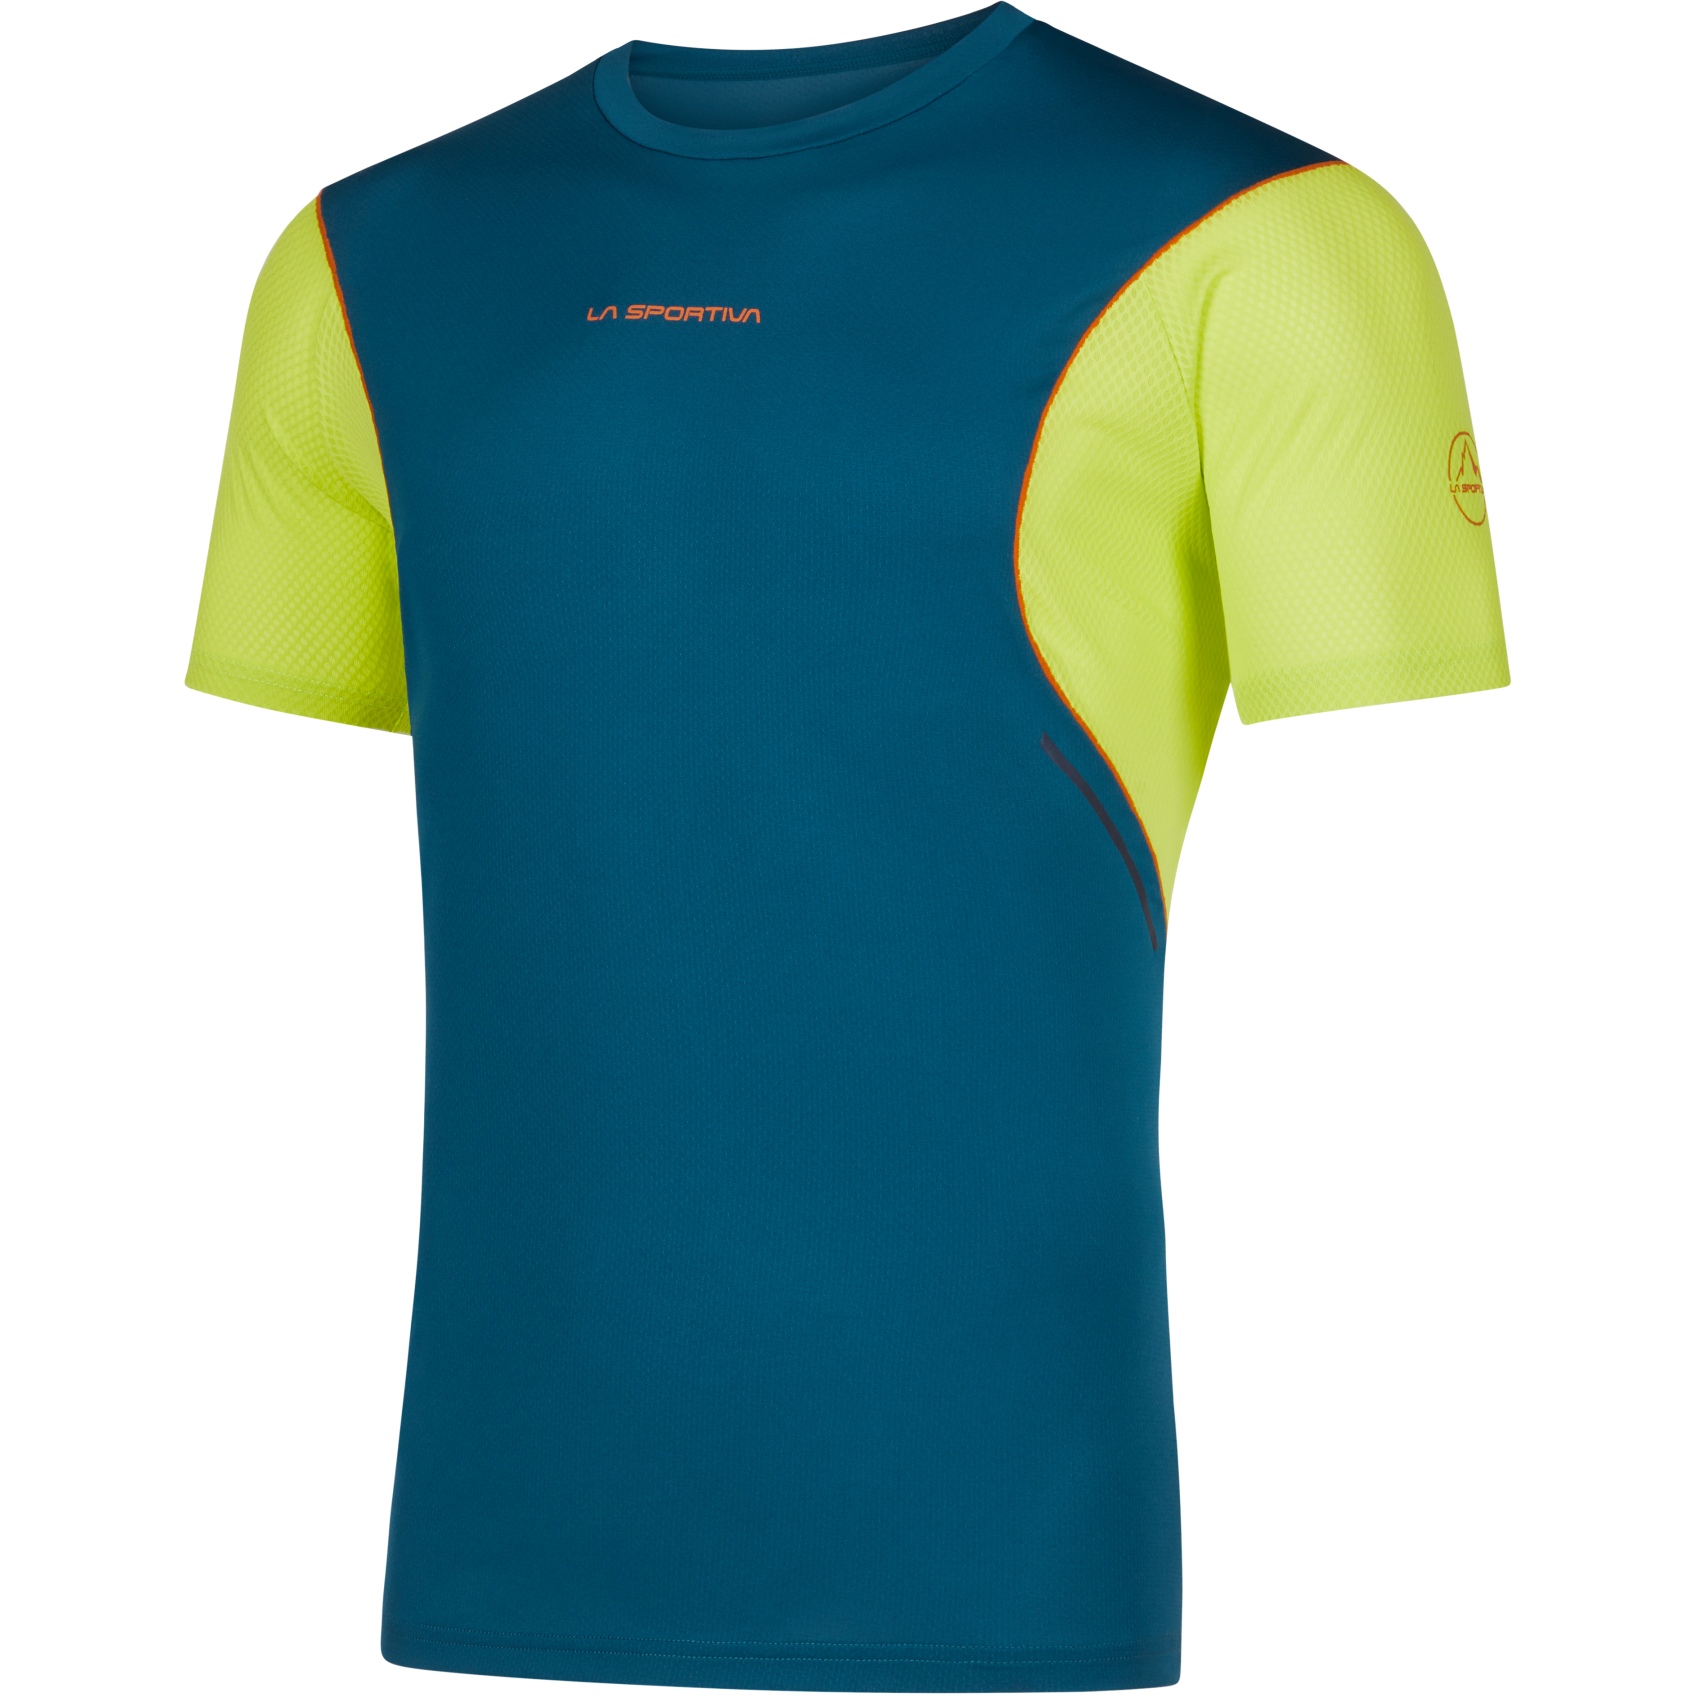 Productfoto van La Sportiva Resolute T-Shirt Heren - Storm Blue/Lime Punch